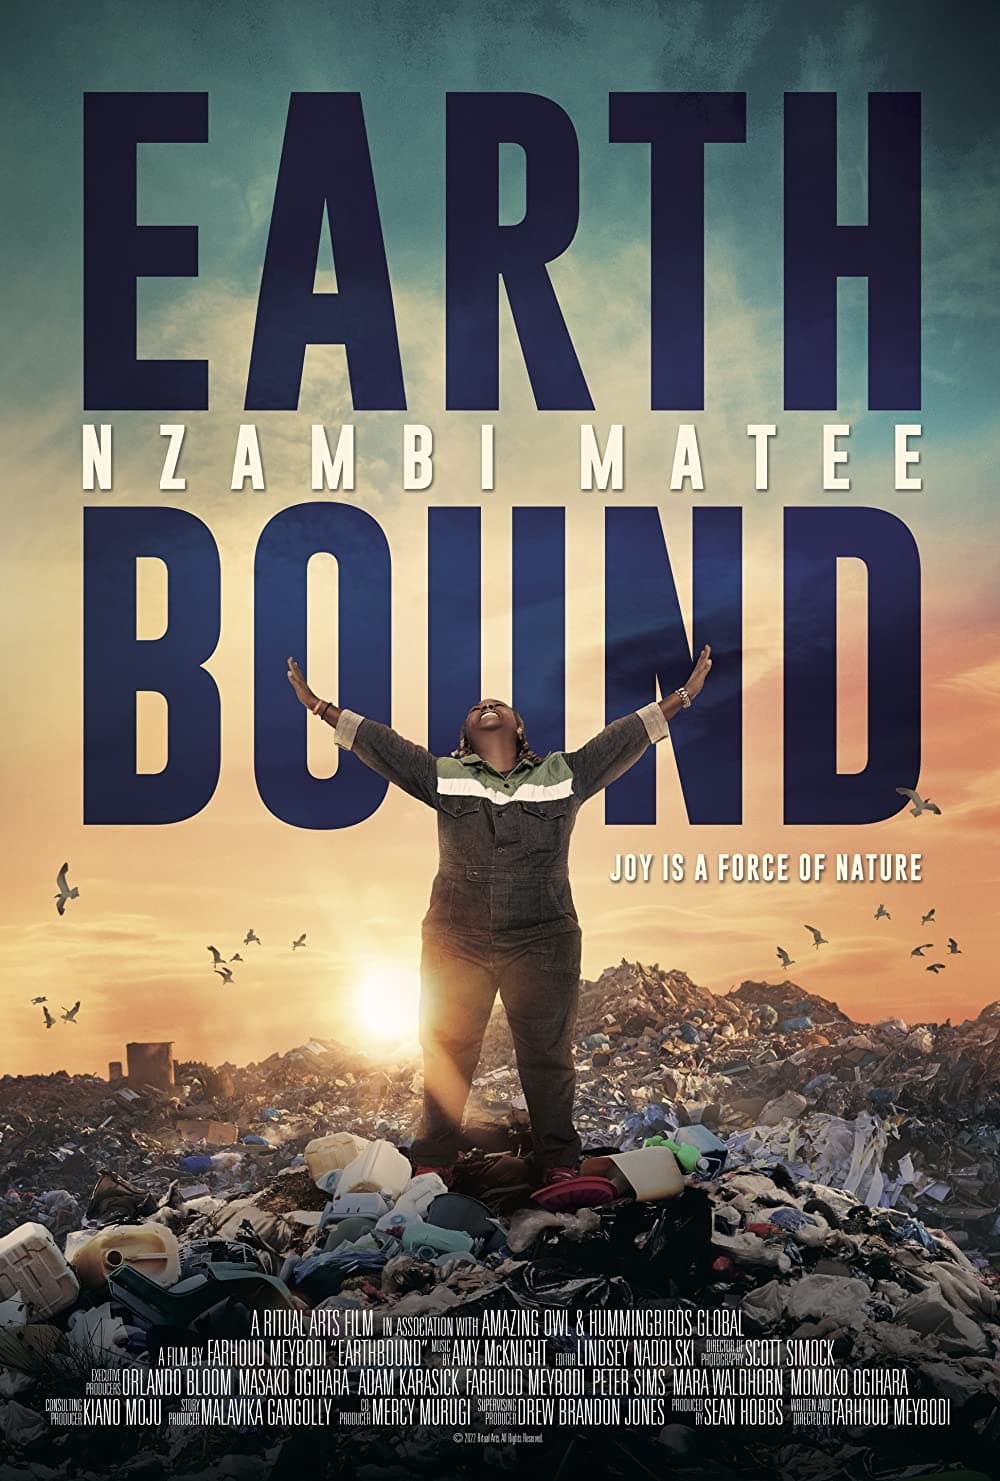 Earthbound: Nzambi Matee